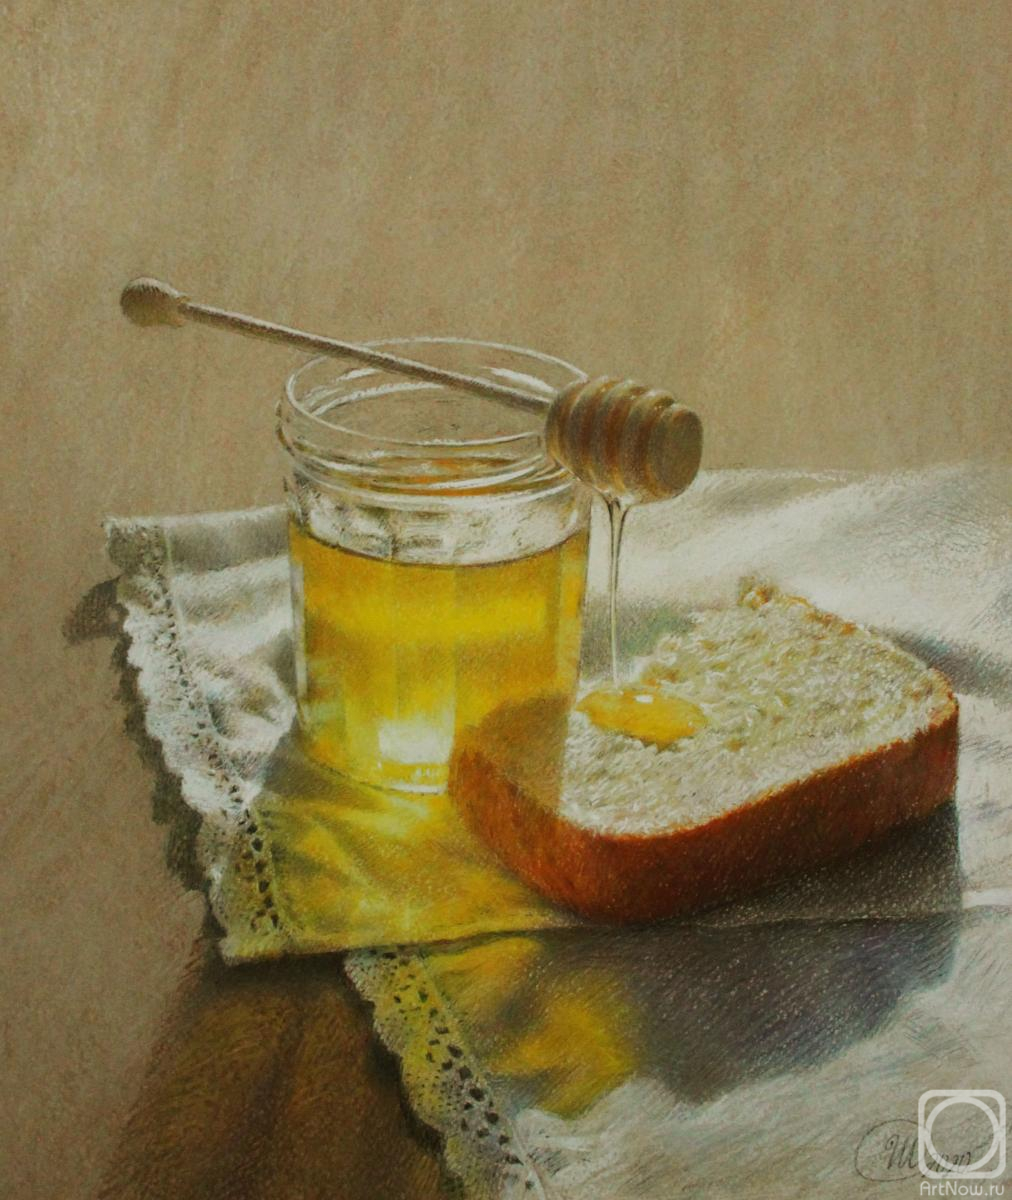 Shirokova Svetlana. Flower honey and homemade bread